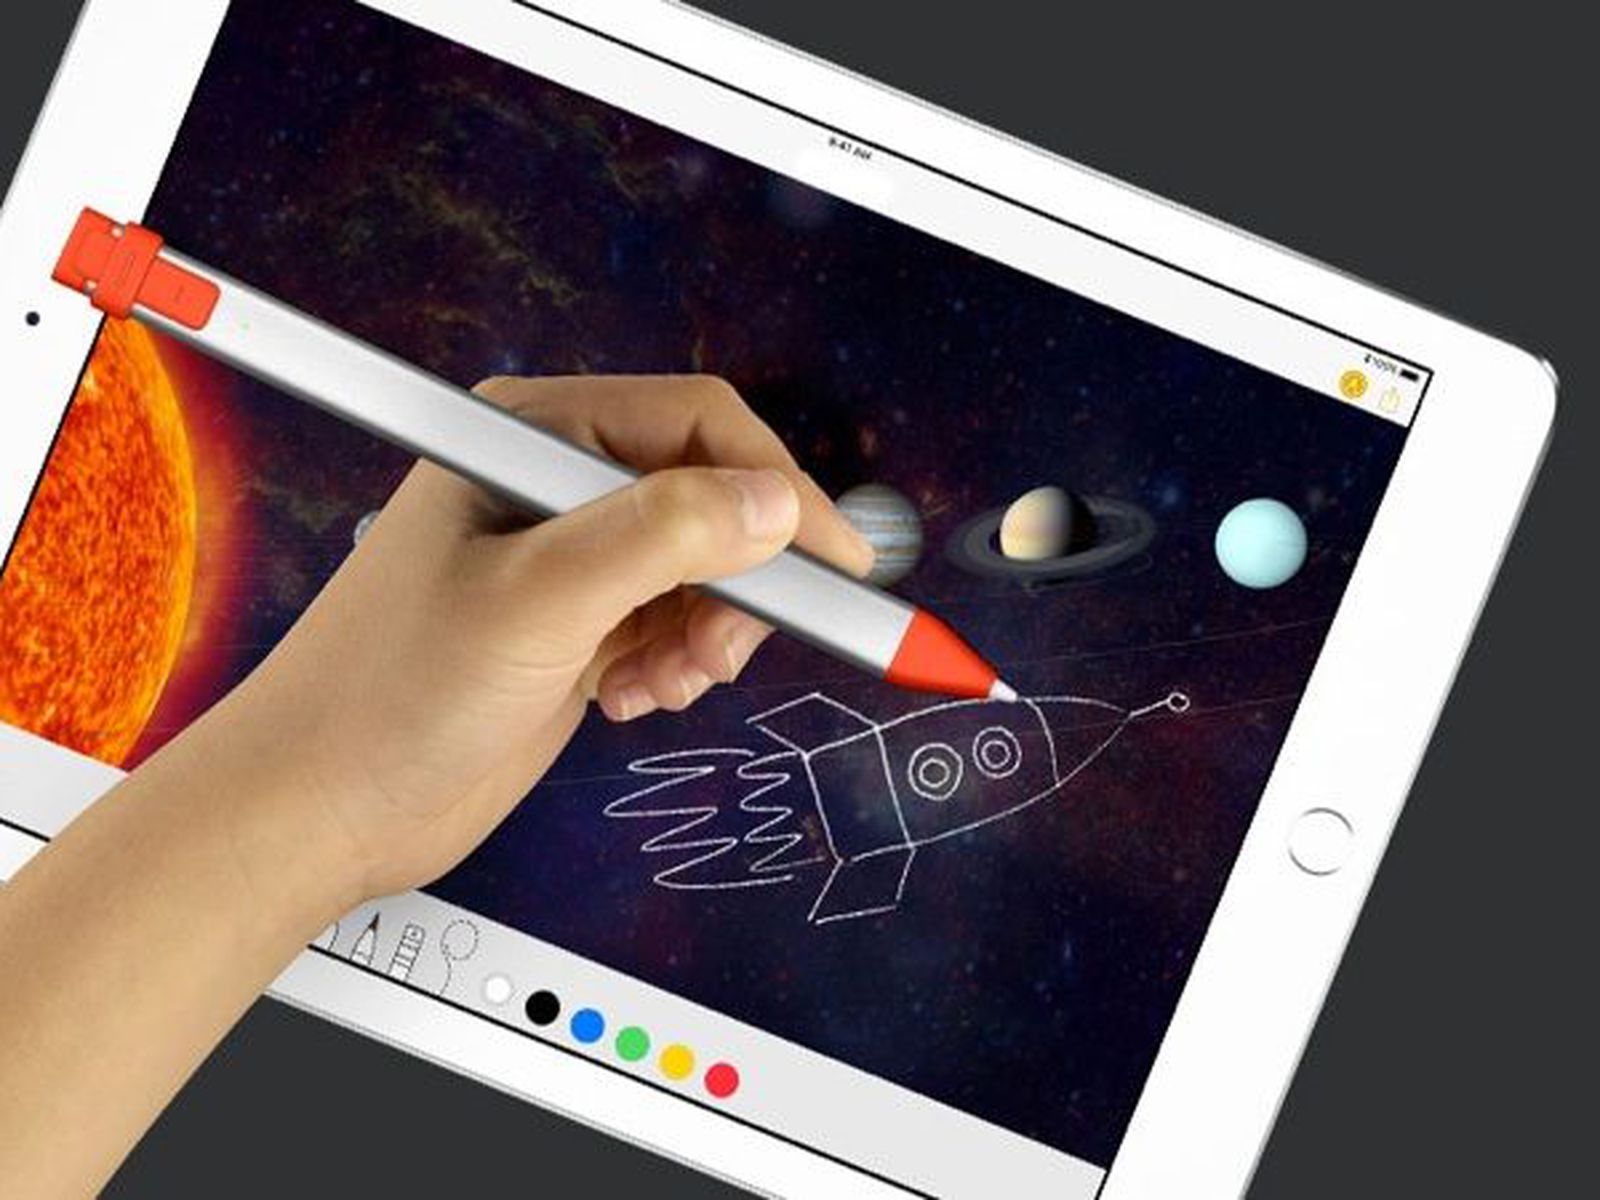 Hands-On With the New iPad Mini 6 - MacRumors